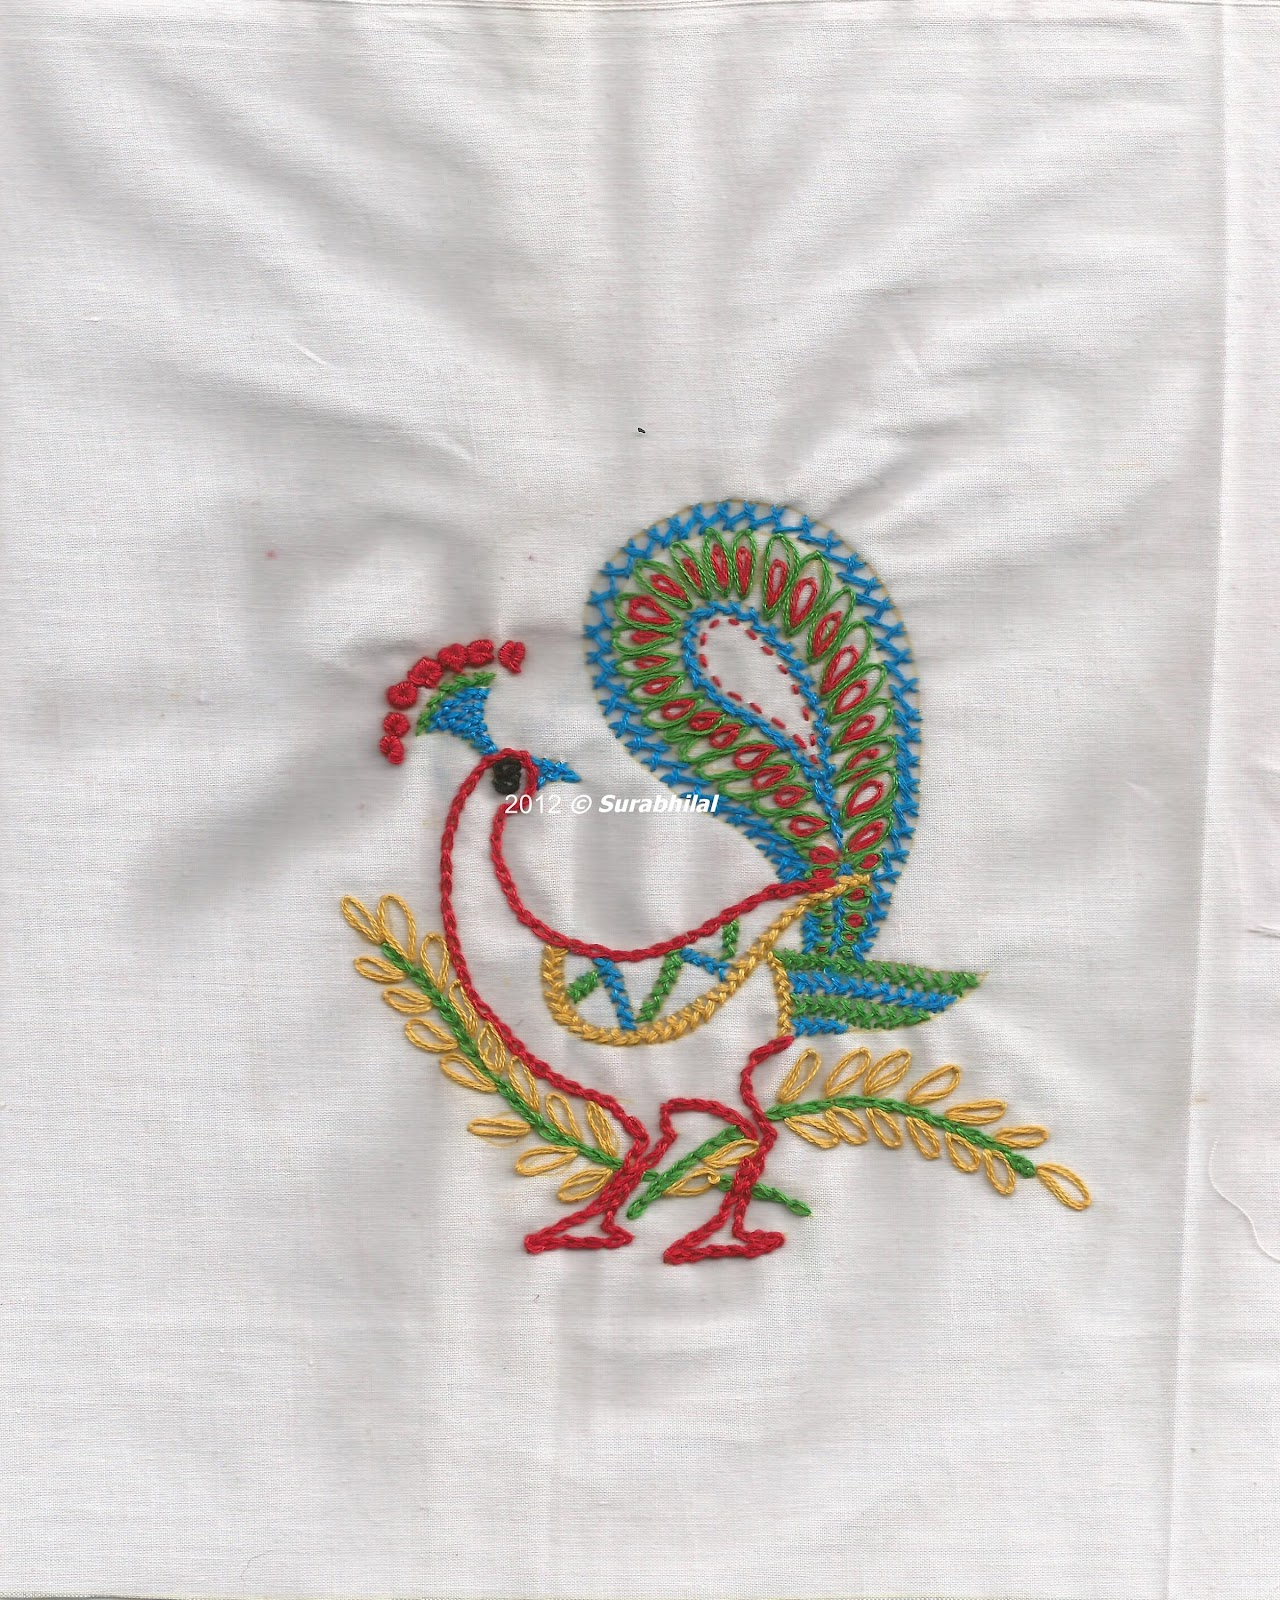 Fish Embroidery Patterns Indian Beauty Blog Fashion Lifestyle Makeup